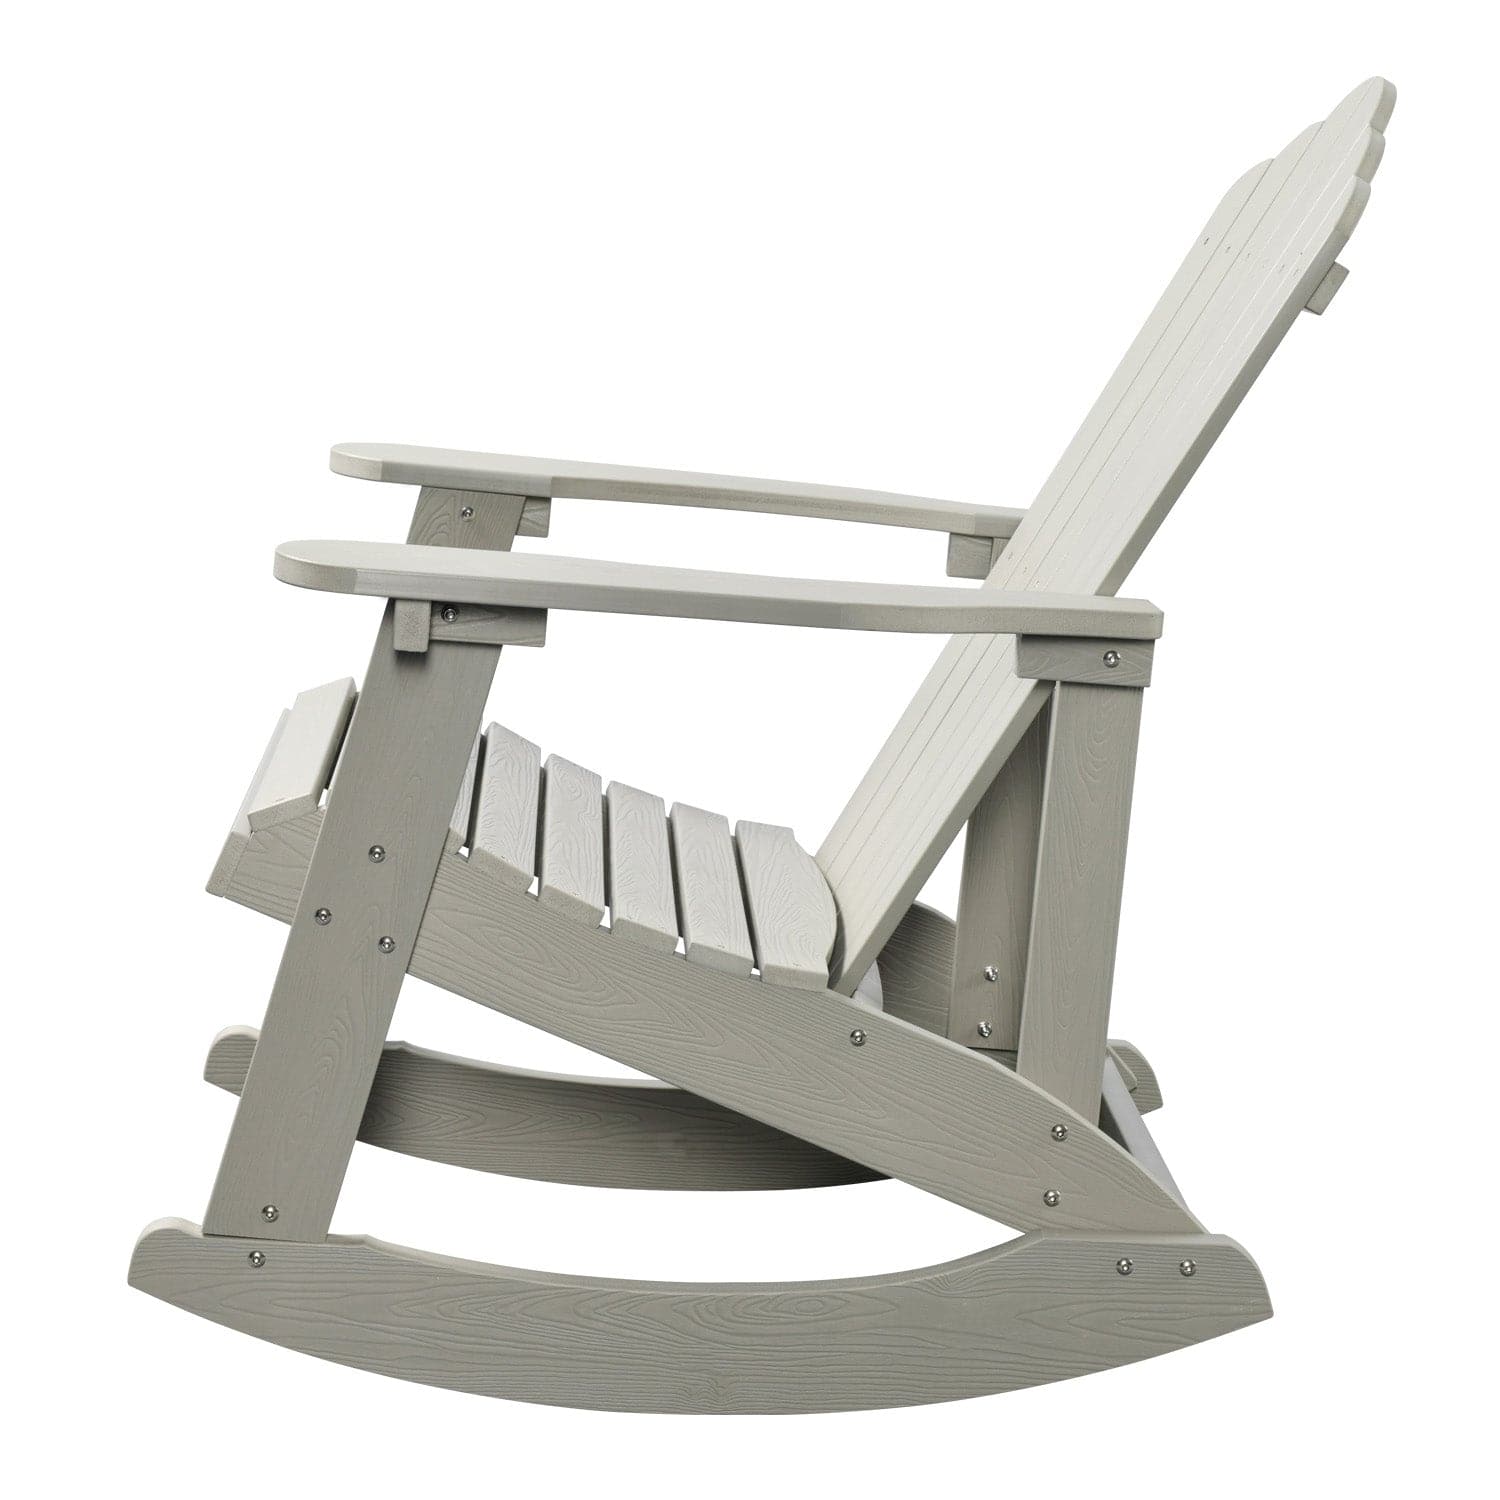 Ovios  Rocking Adirondack Chair 2-Piece Waterproof Plastic Frame